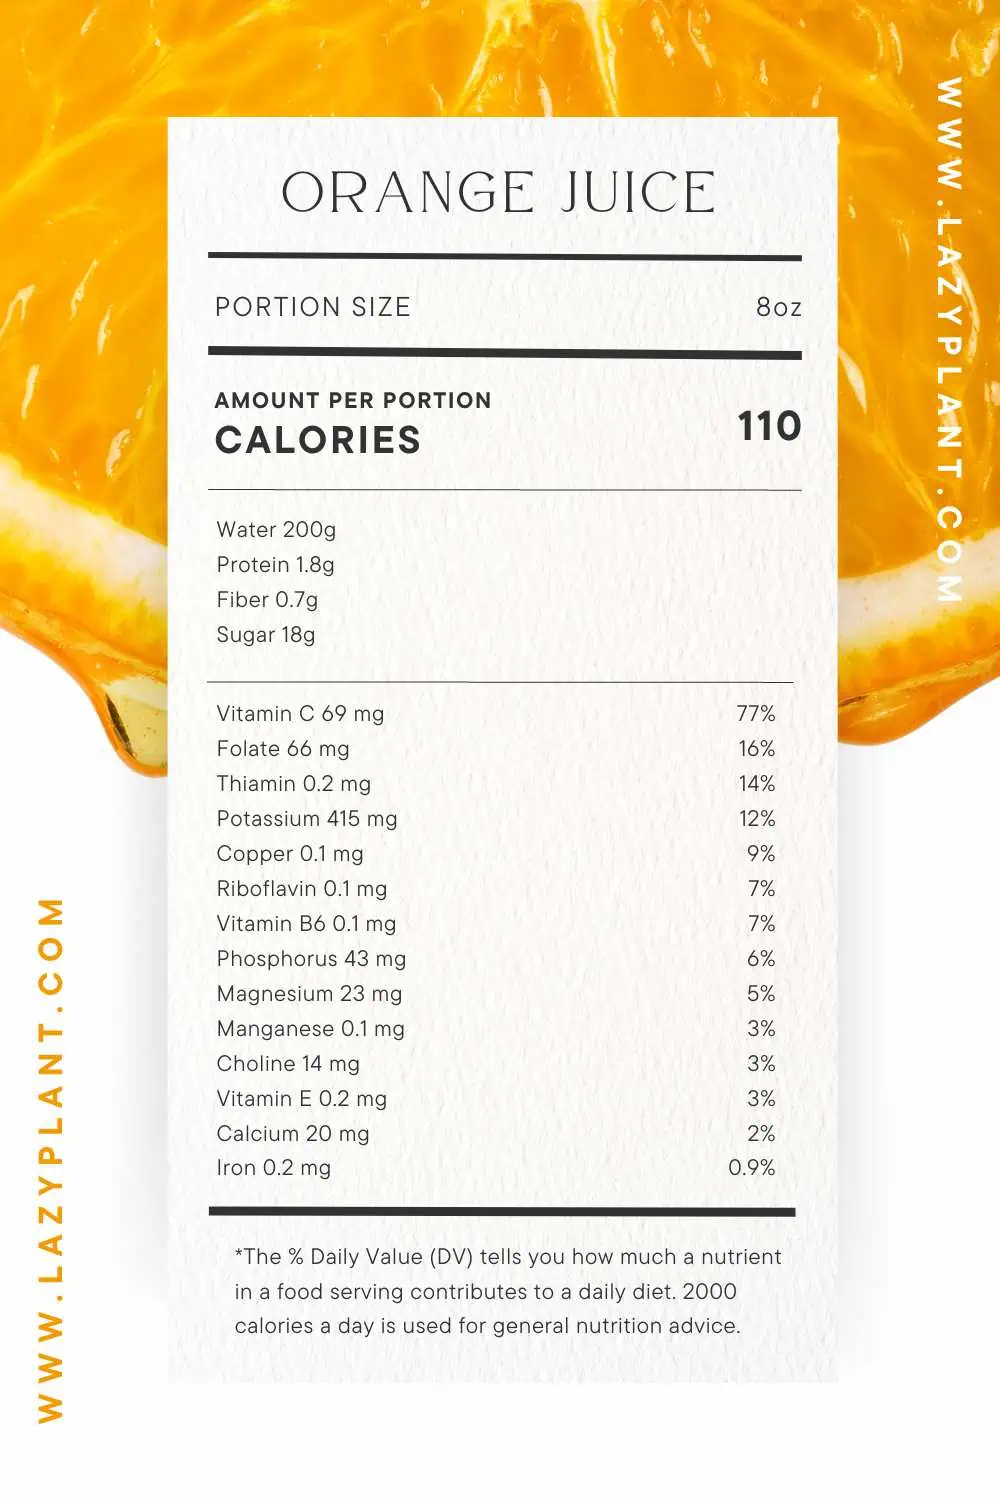 Nutrition facts label of orange juice.